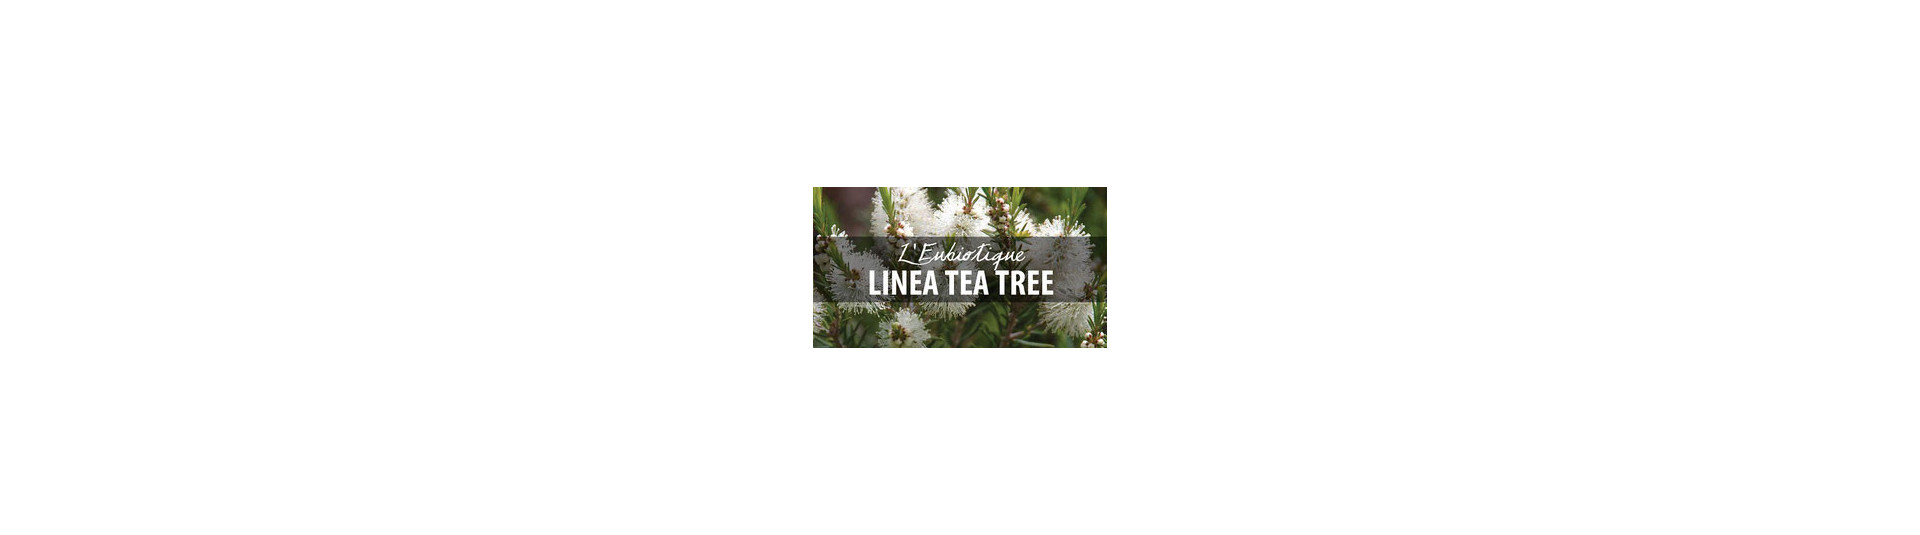 Linea Tea Tree